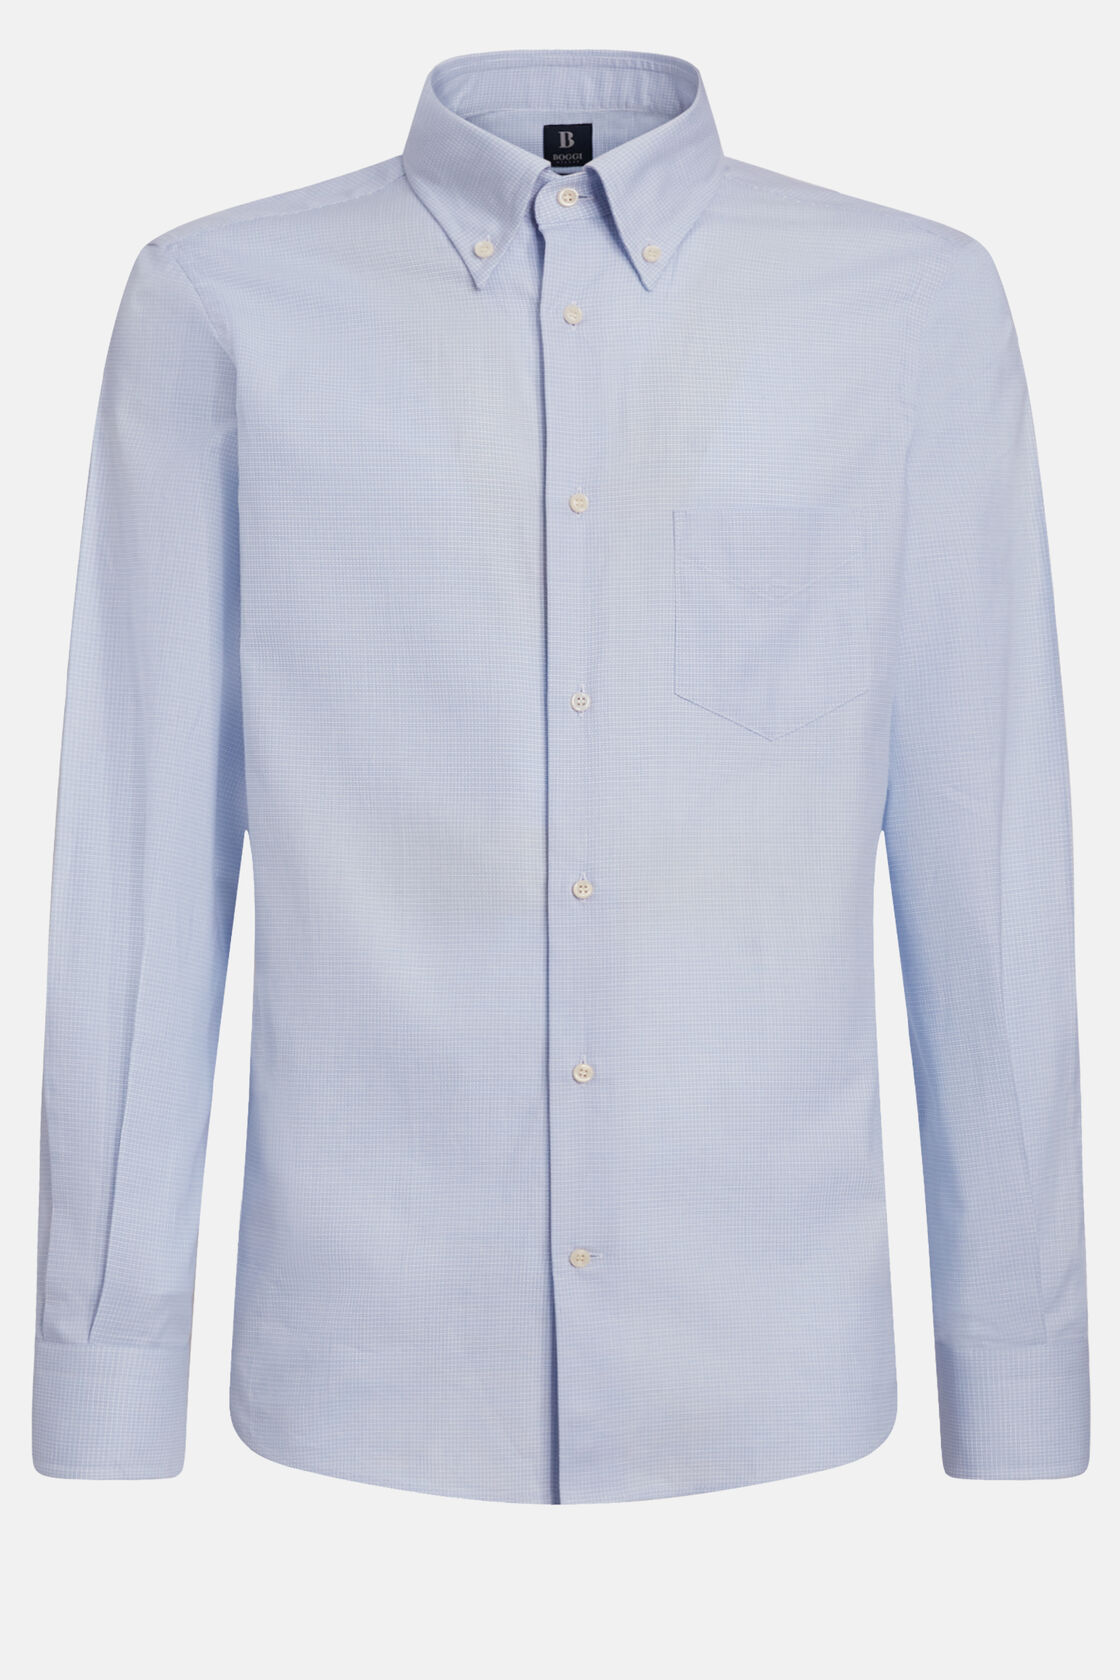 Regular Fit Sky Blue Dobby Cotton Shirt, Light Blu, hi-res